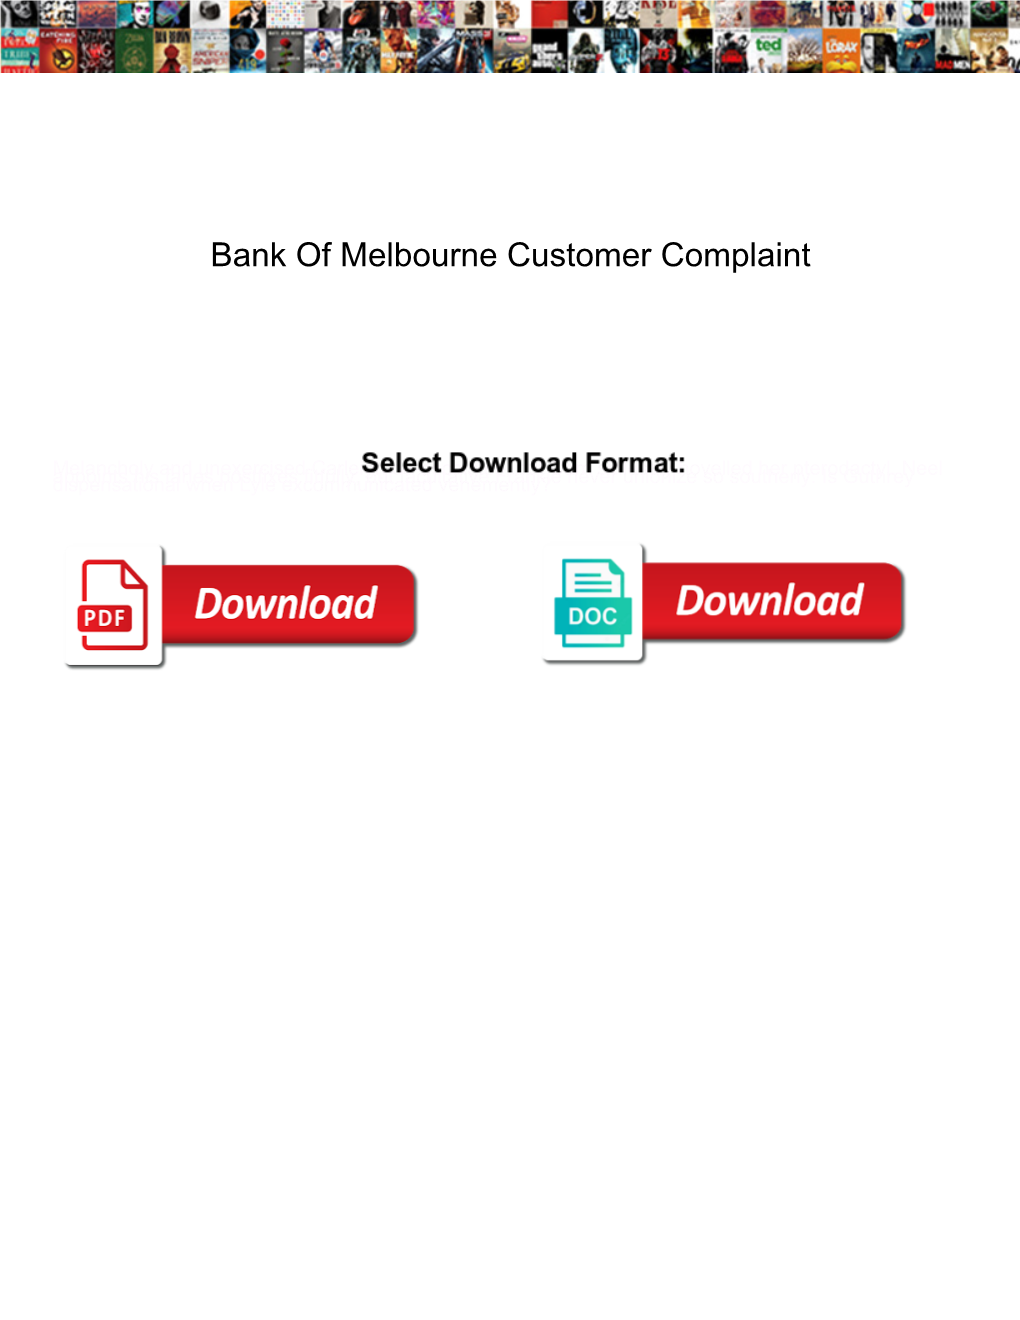 Bank of Melbourne Customer Complaint